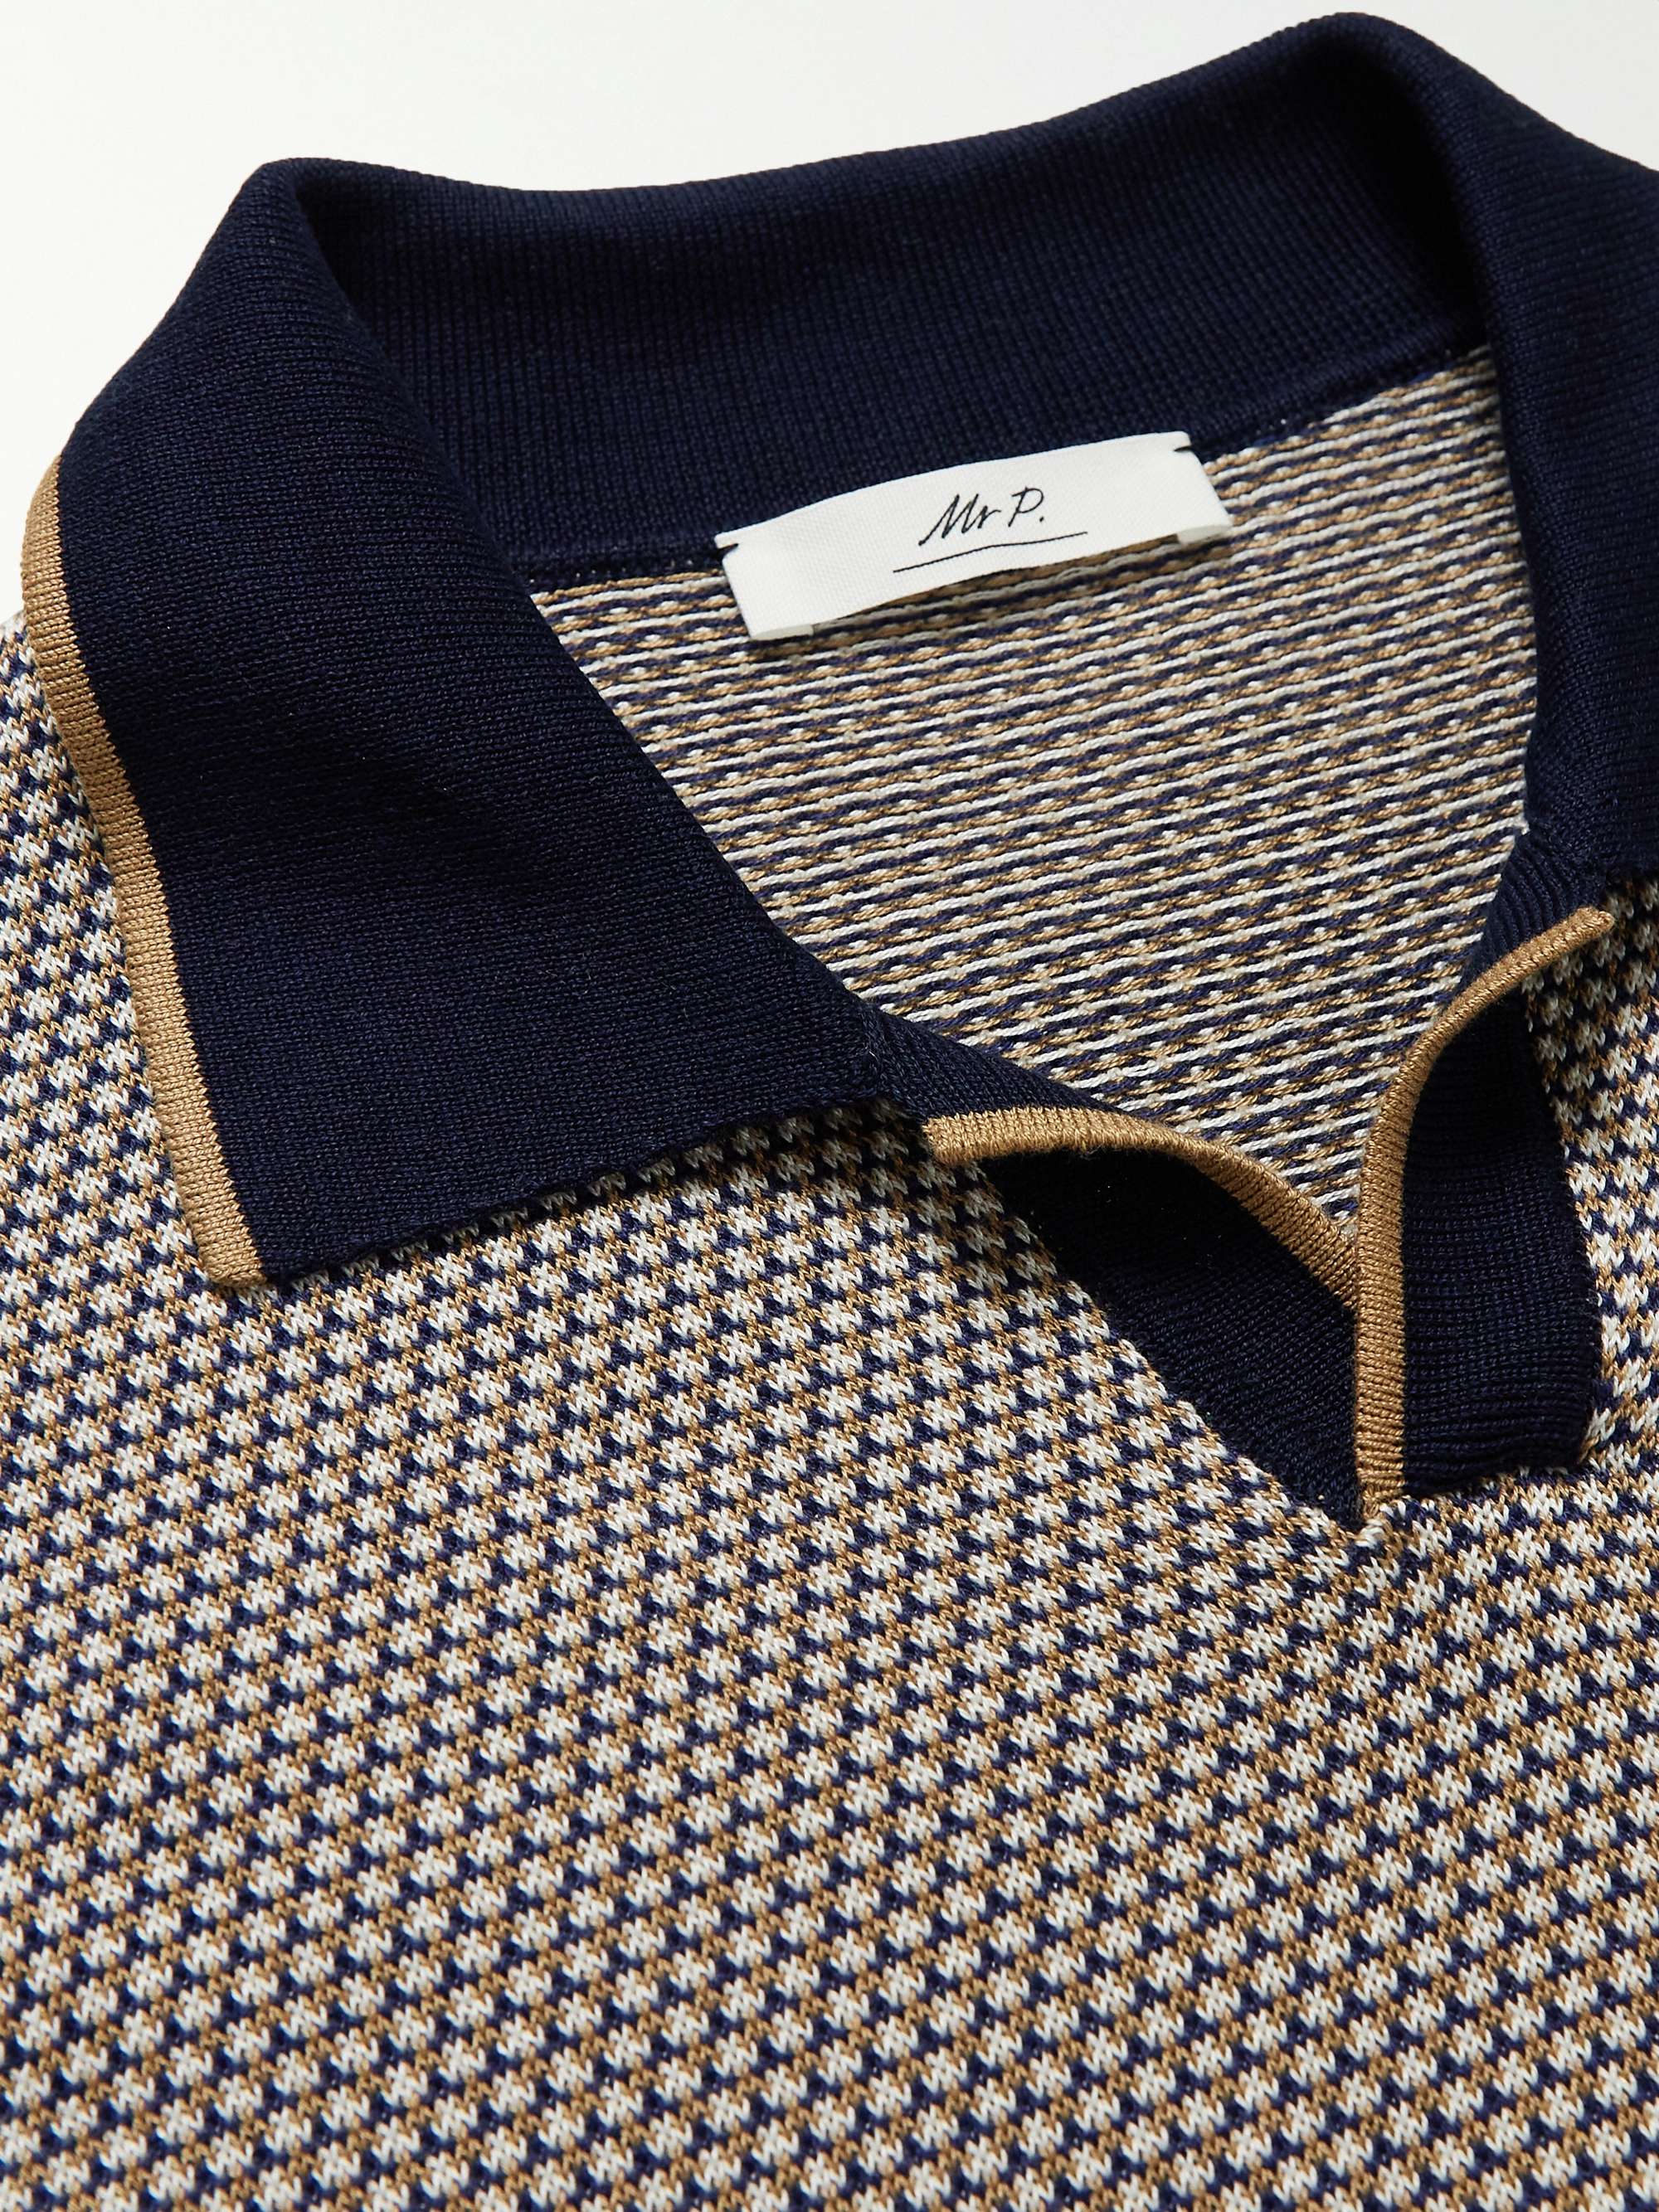 MR P. Slim-Fit Honeycomb-Knit Organic Cotton Polo Shirt